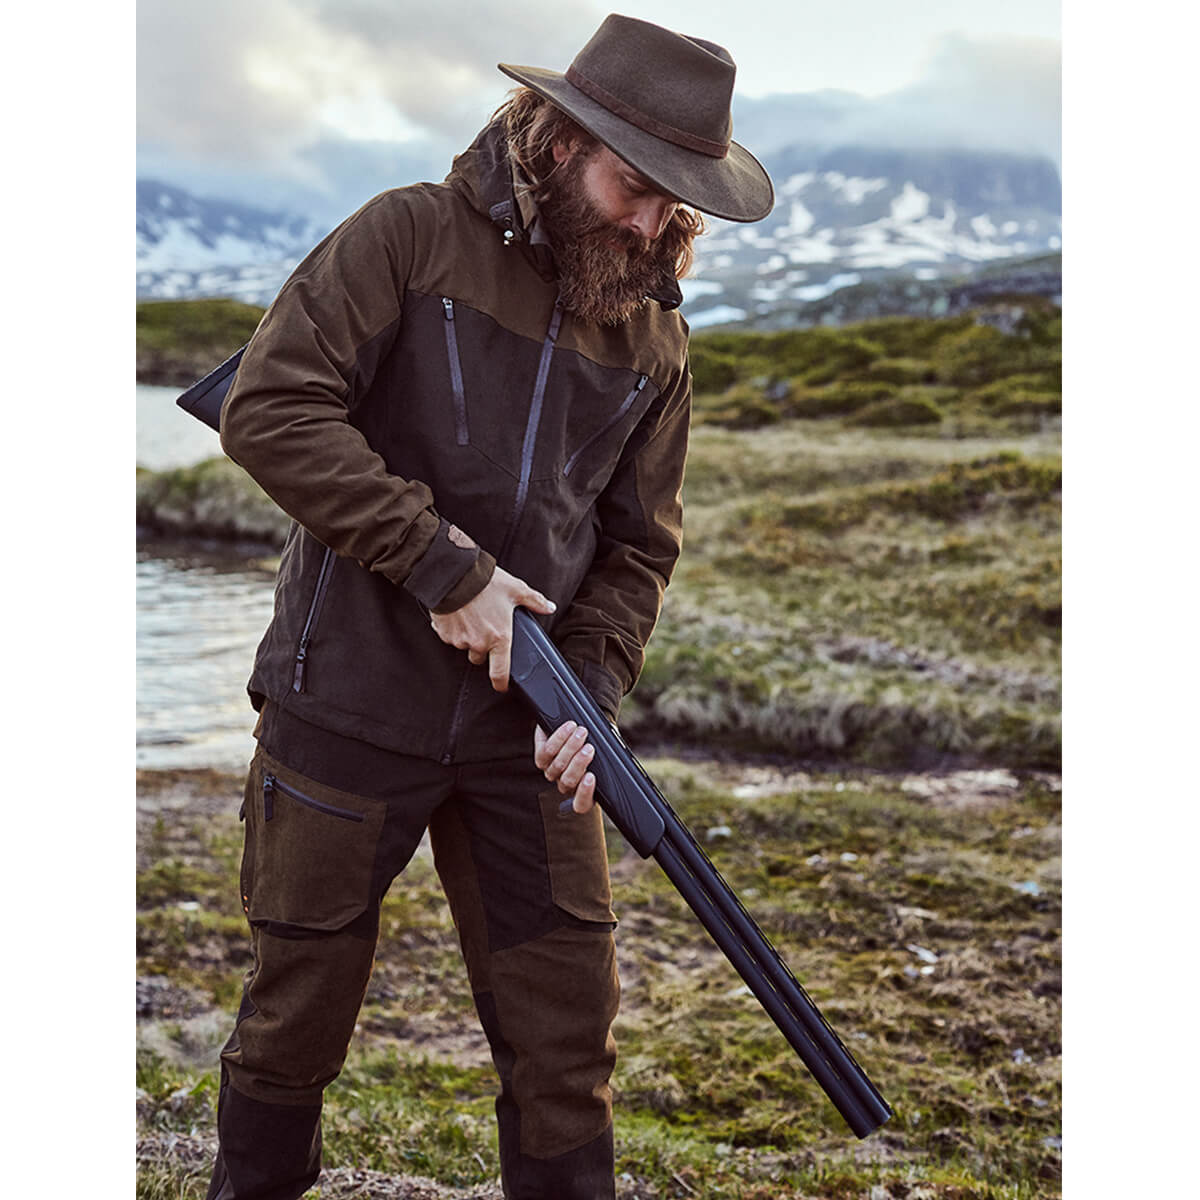 Northern Hunting Aslak Hugin hunting jacket